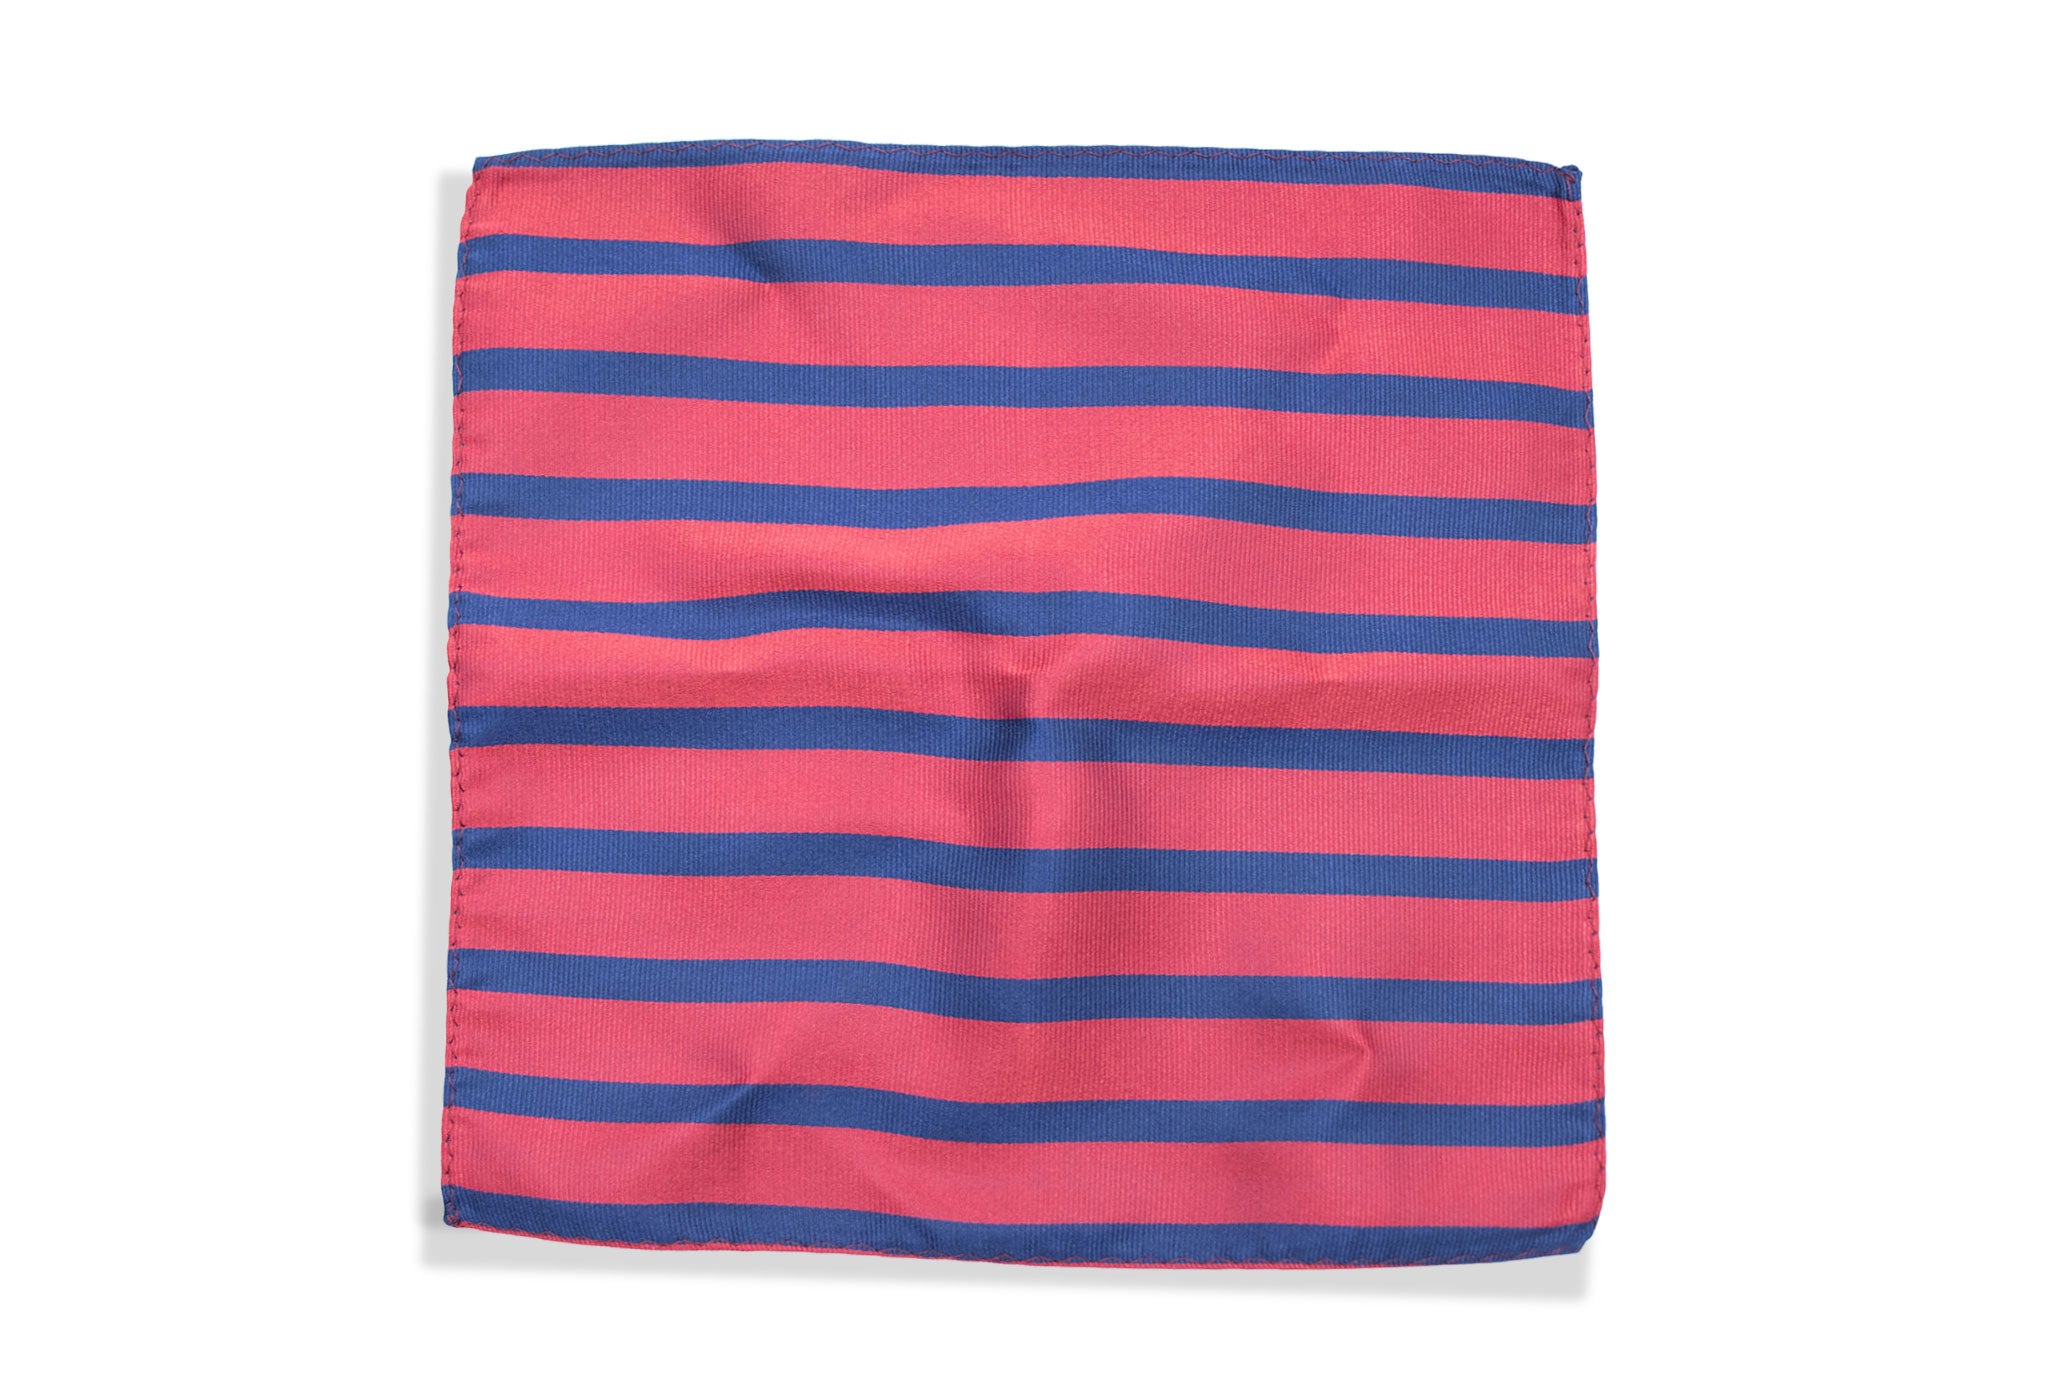 Cope Red/Blue Striped Silk Pocket Square